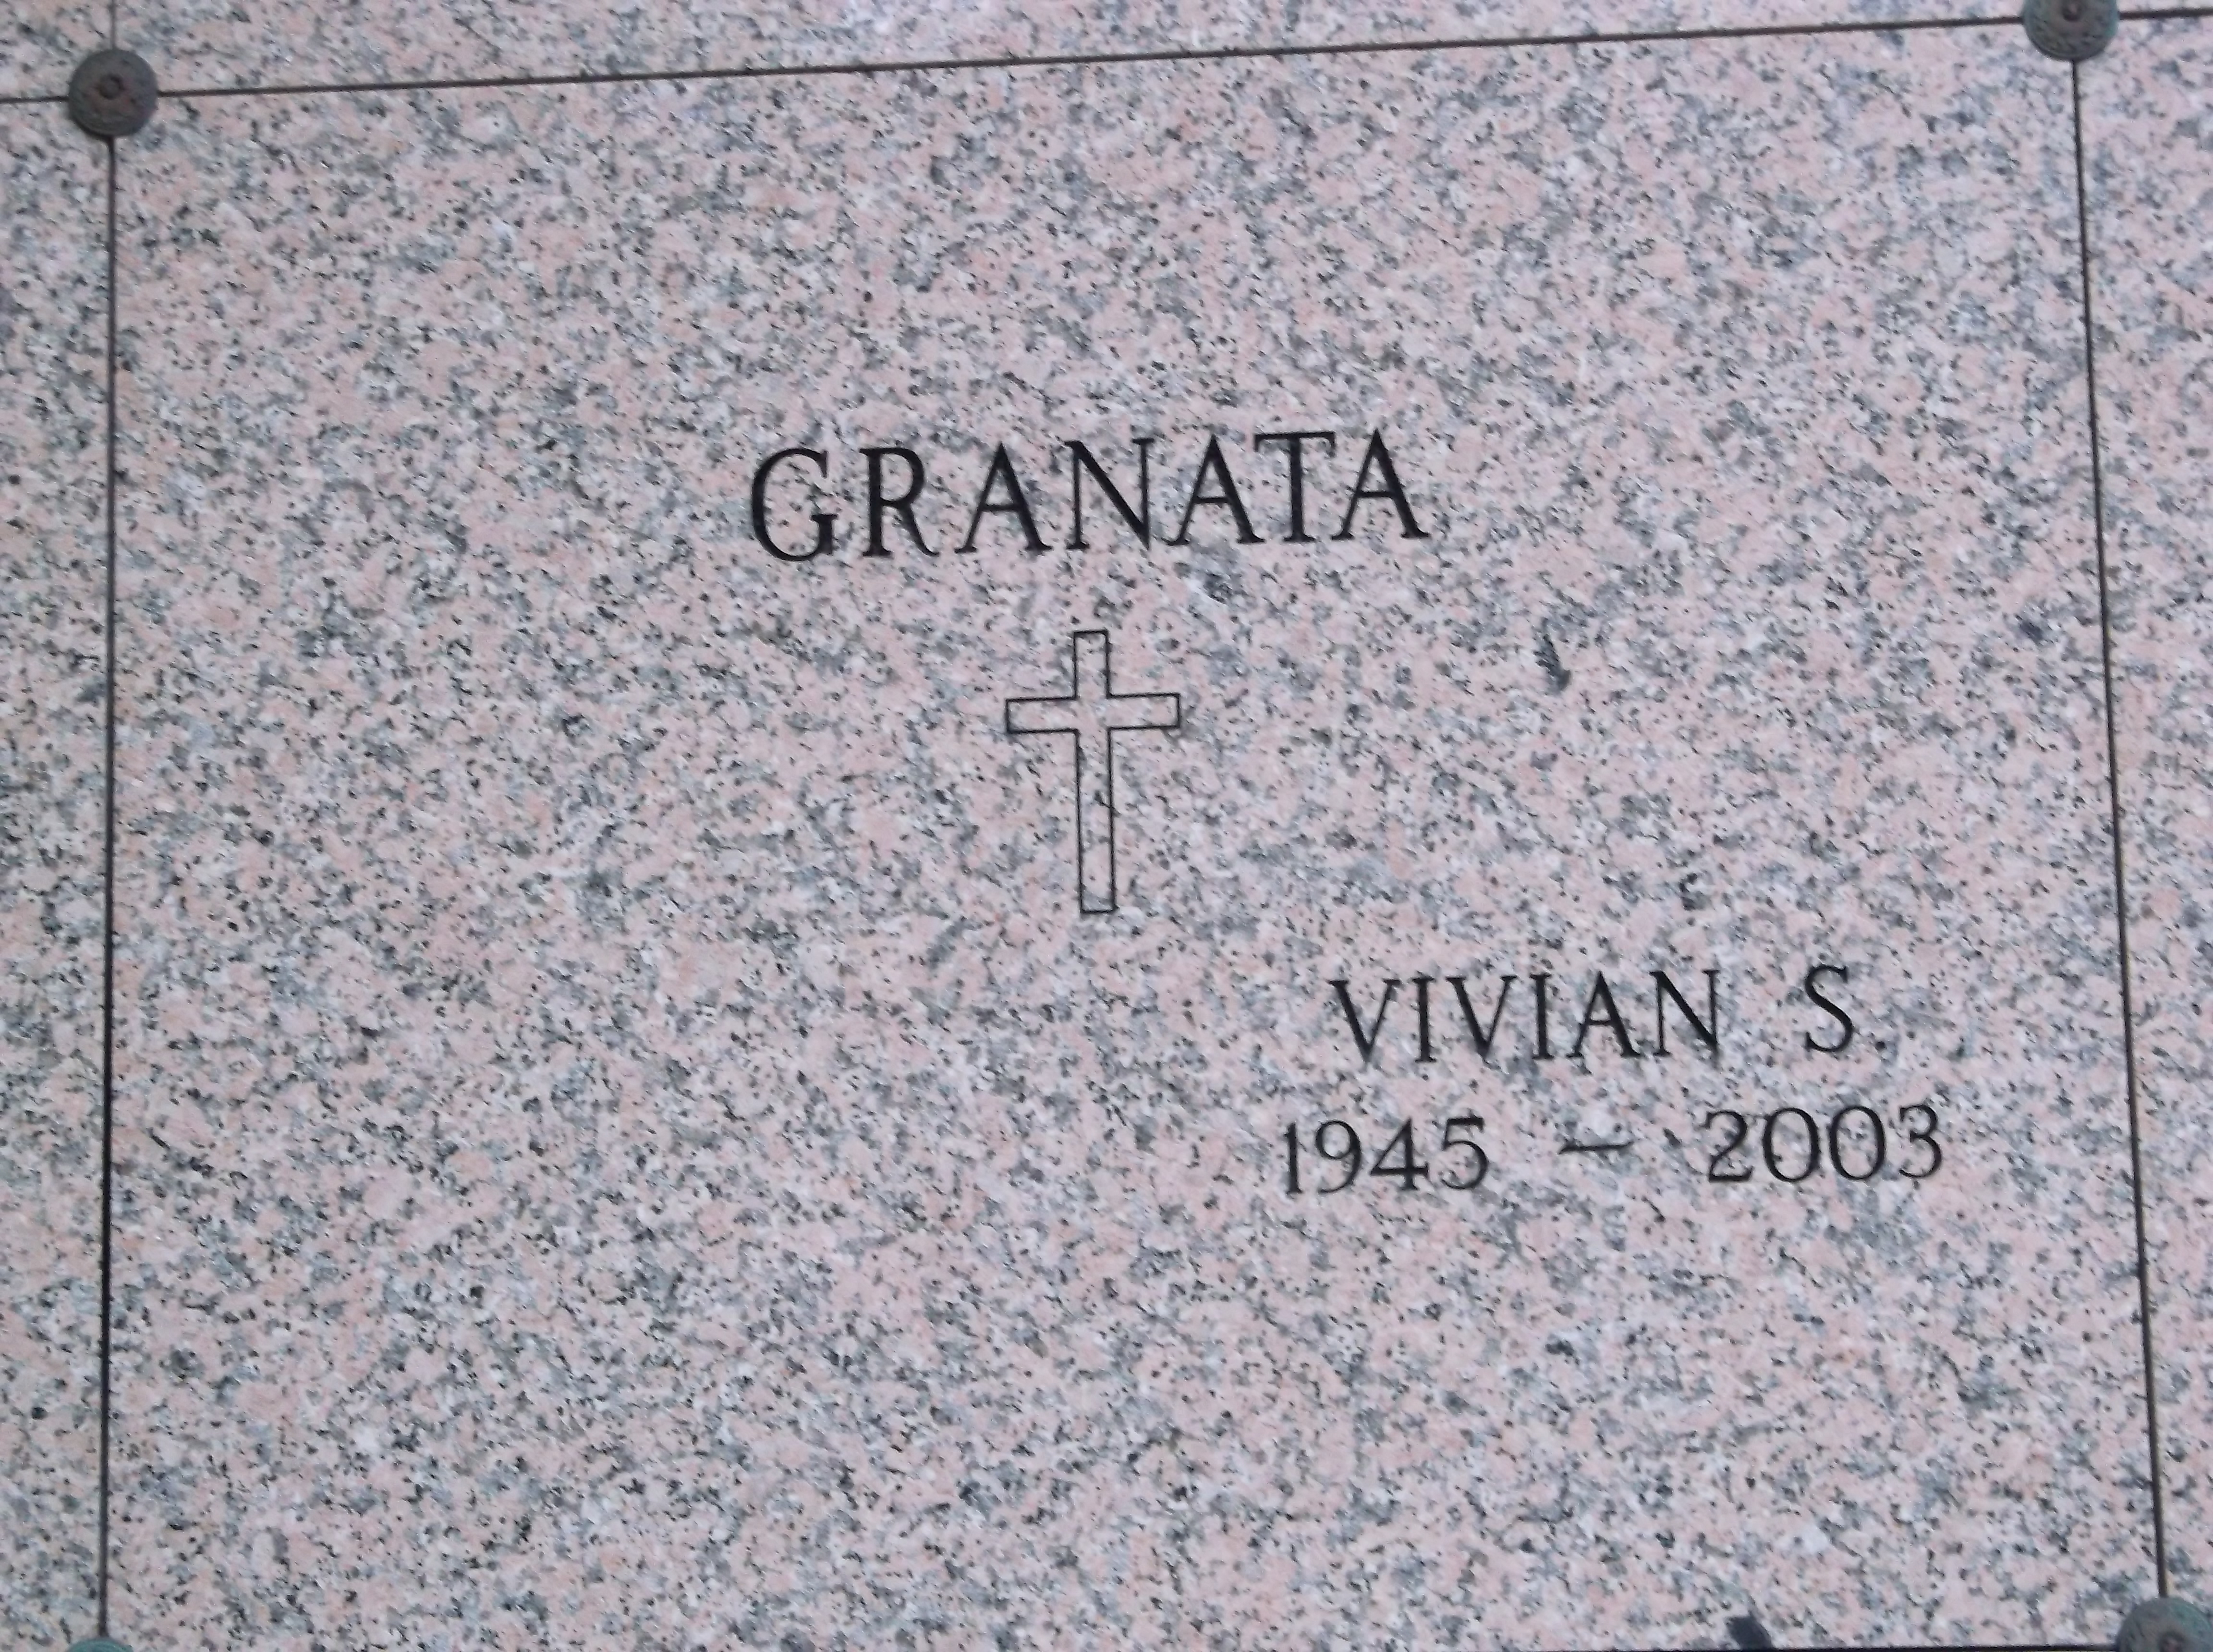 Vivian S Granata